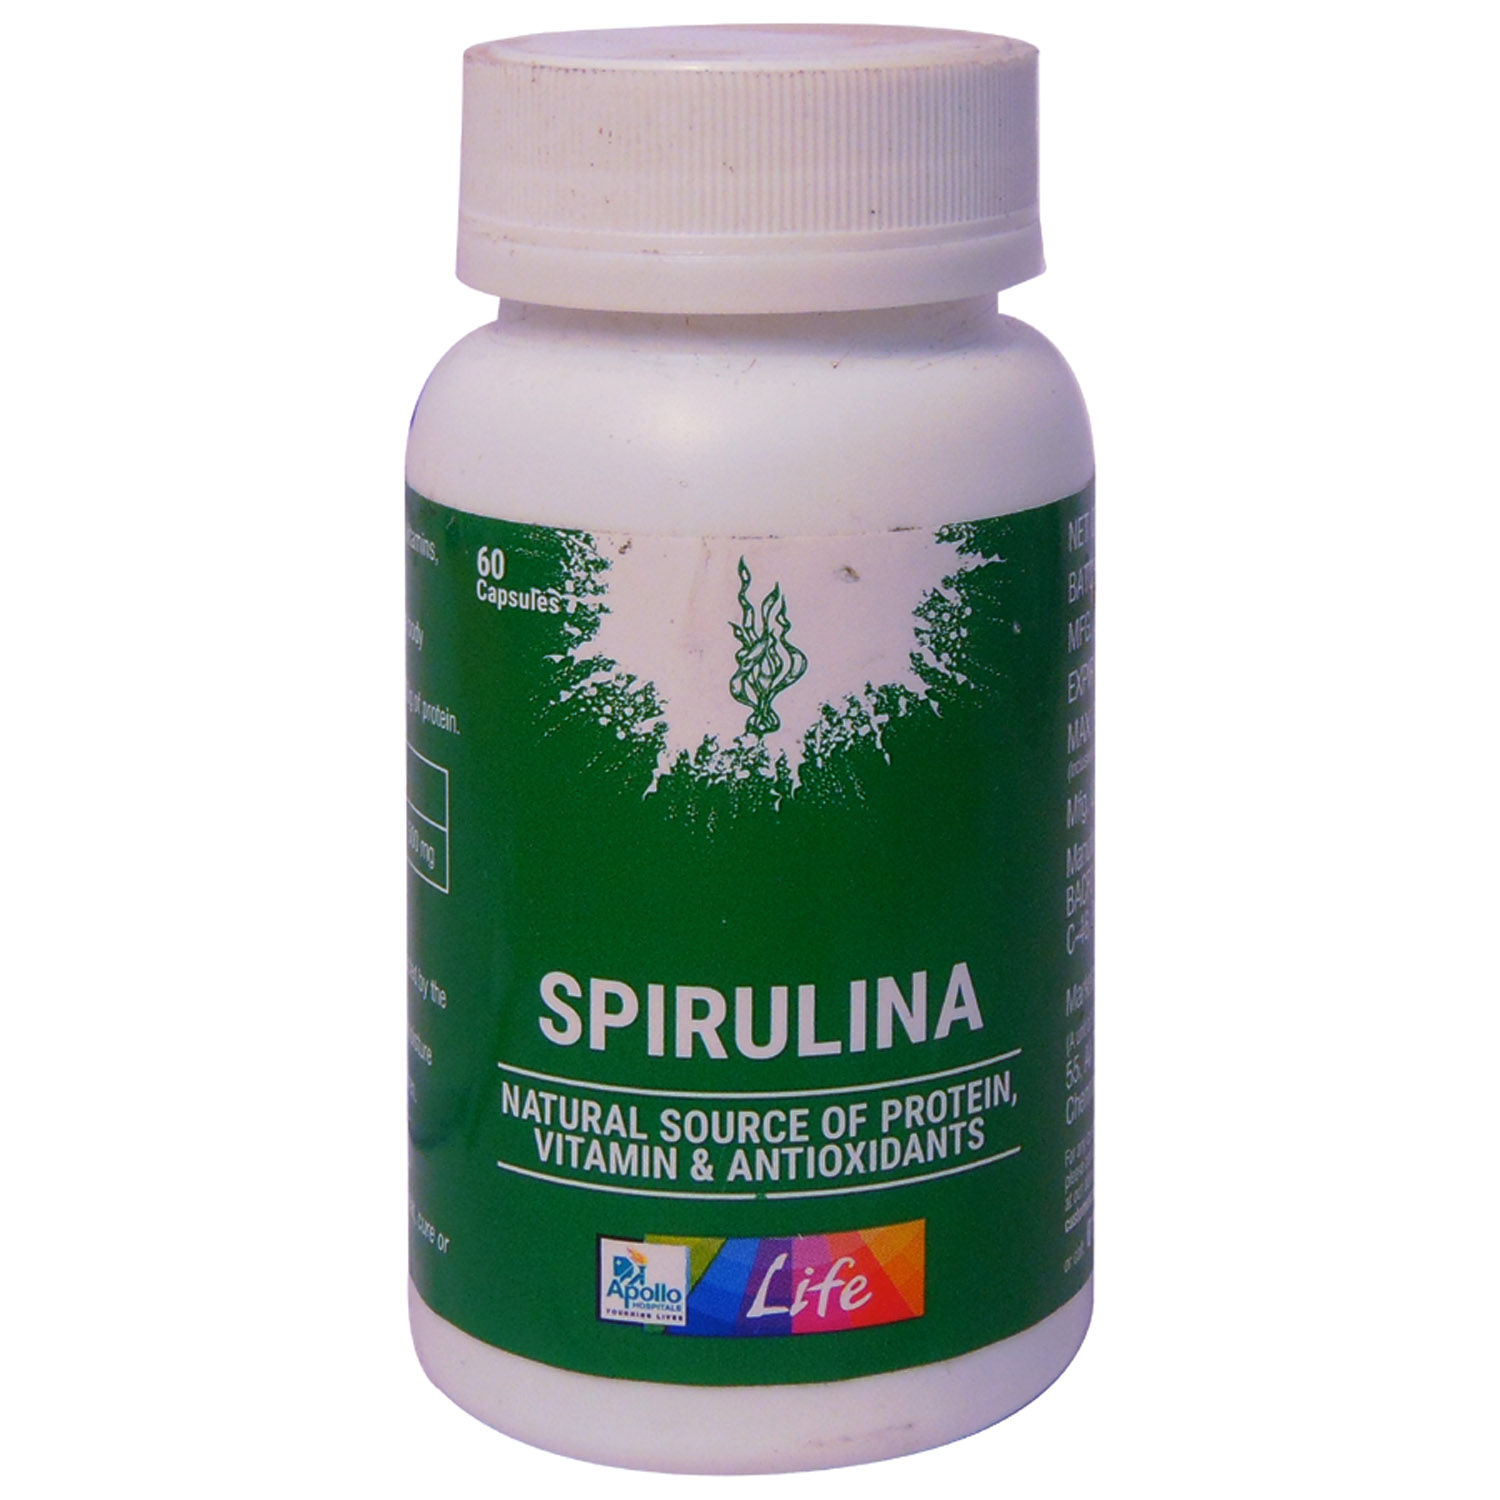 Buy Apollo Life Spirulina, 60 Capsules Online